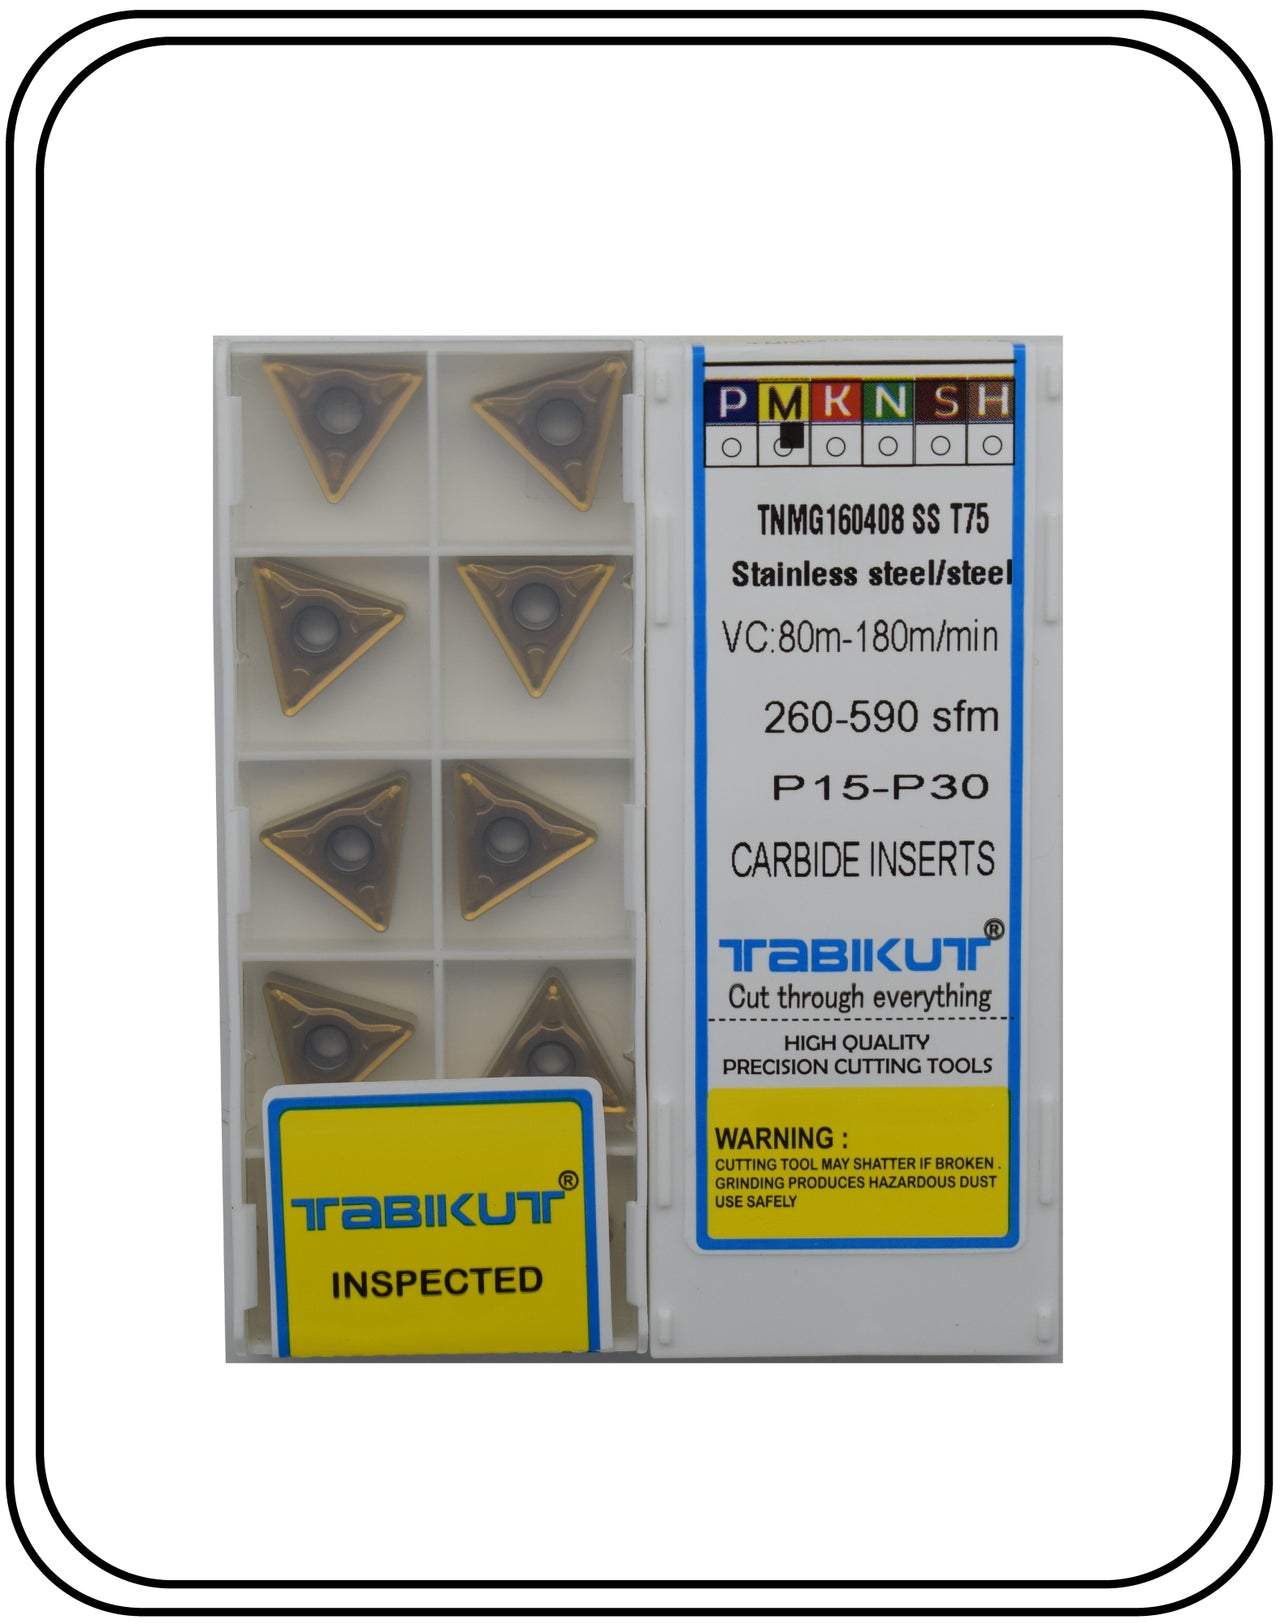 TNMG160402/04/08/12 specially stainless stee Tabikut  carbide insert (1box) pack of 10